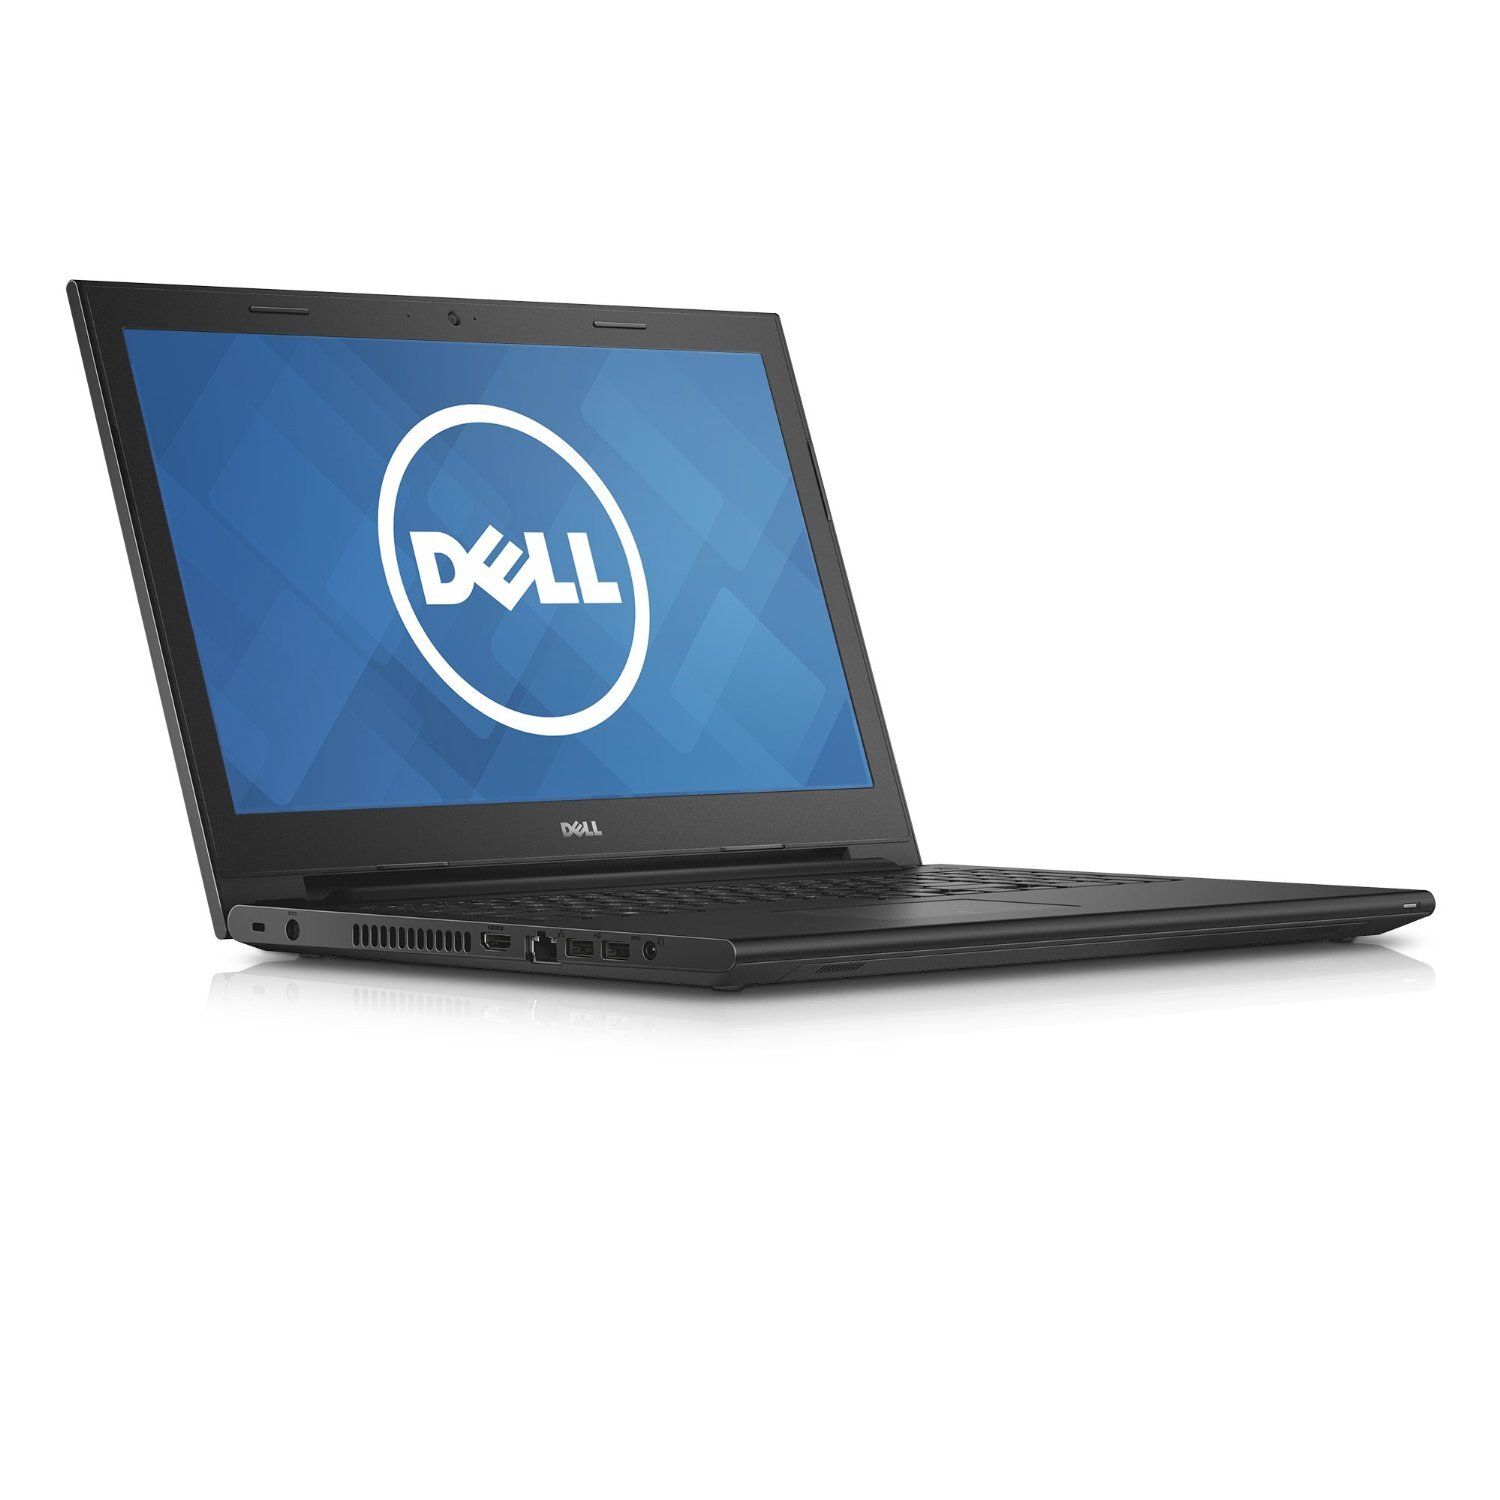 Laptop Dell Inspiron 15 3543-696TP5 - Intel Core i7-5500U 2.4Ghz, 4GB RAM, 500GB HDD, NVIDIA Geforce GT840M, 15.6 inch